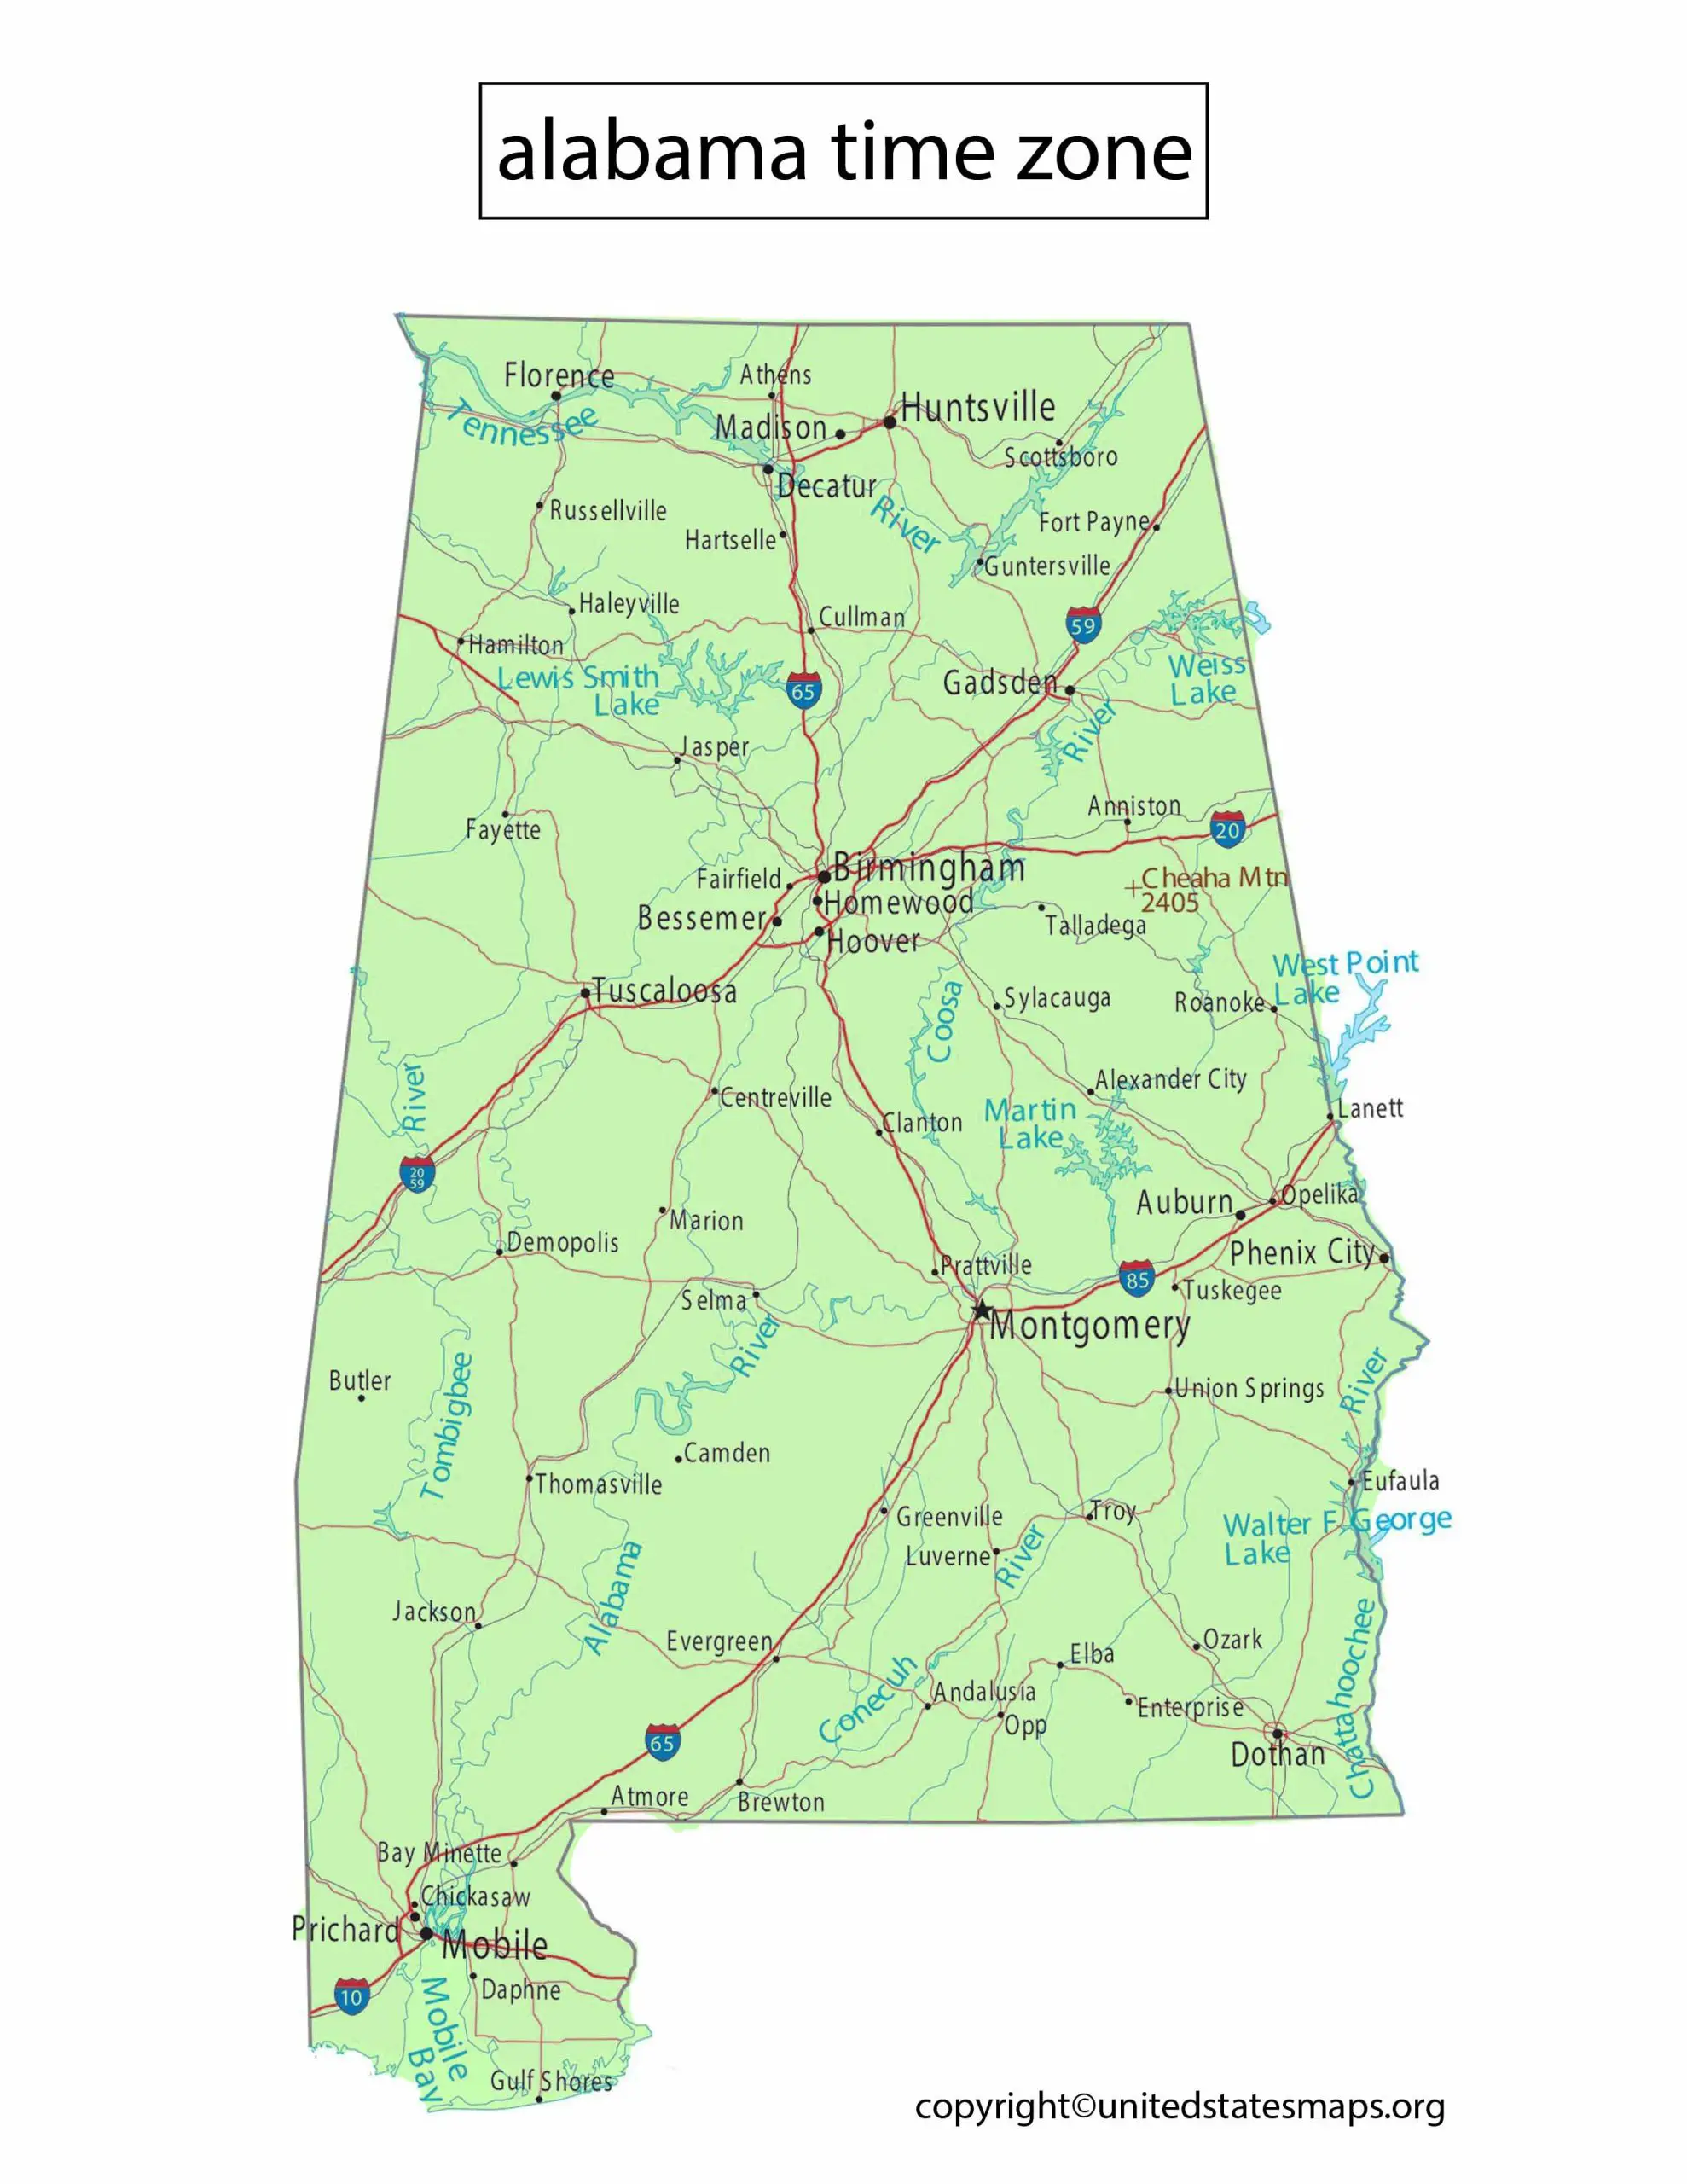 Alabama Time Zone Map | Time Zone Map of Alabama alabama is eastern time